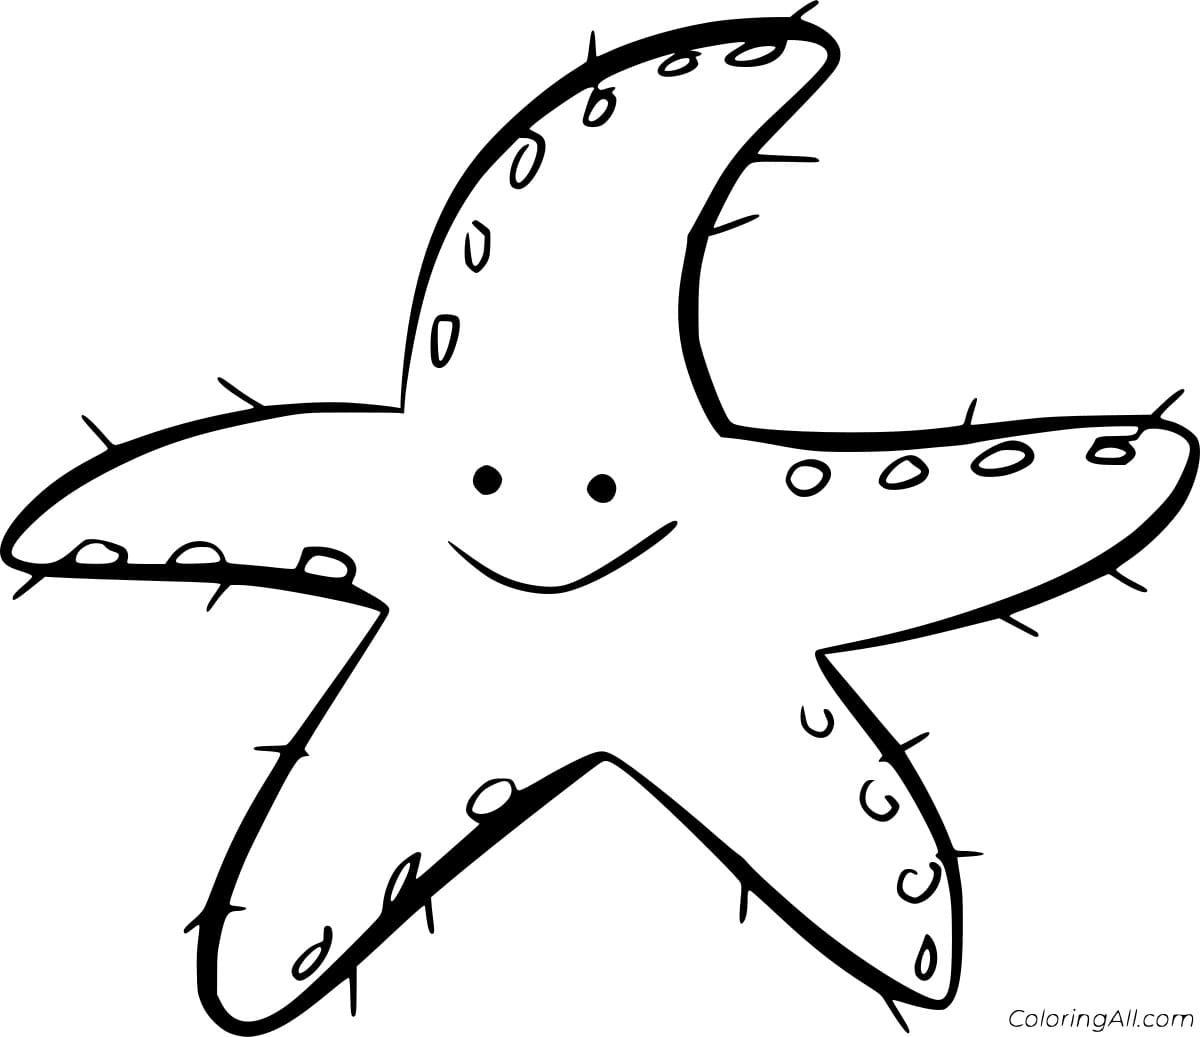 Cartoon Smiling Sea Star Image Coloring Page